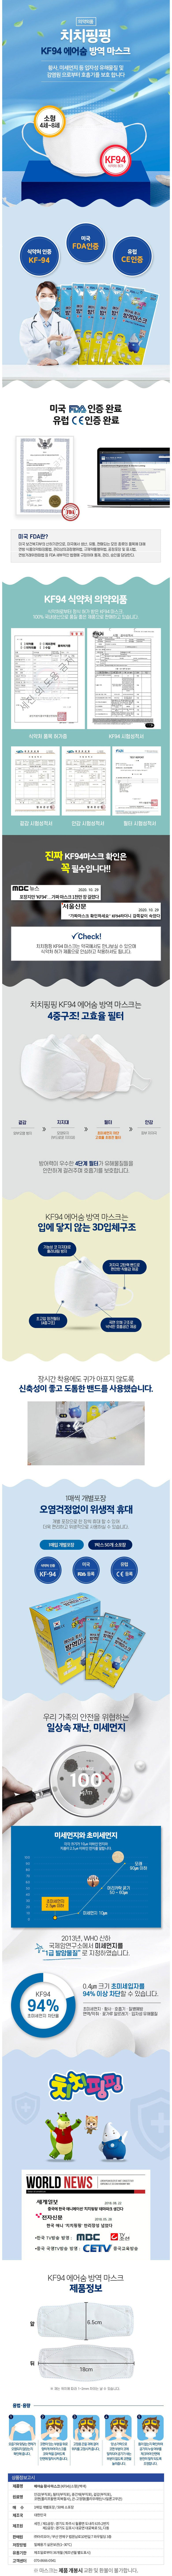 Chichi Pingping Korea Face Mask KF94 FDA for Kids 50ea  Component Chichi Pingping Korea Face Mask KF94 FDA for Kids x 50ea  Size 18 x 6.5(cm)  Country Of Origin Republic Of Korea